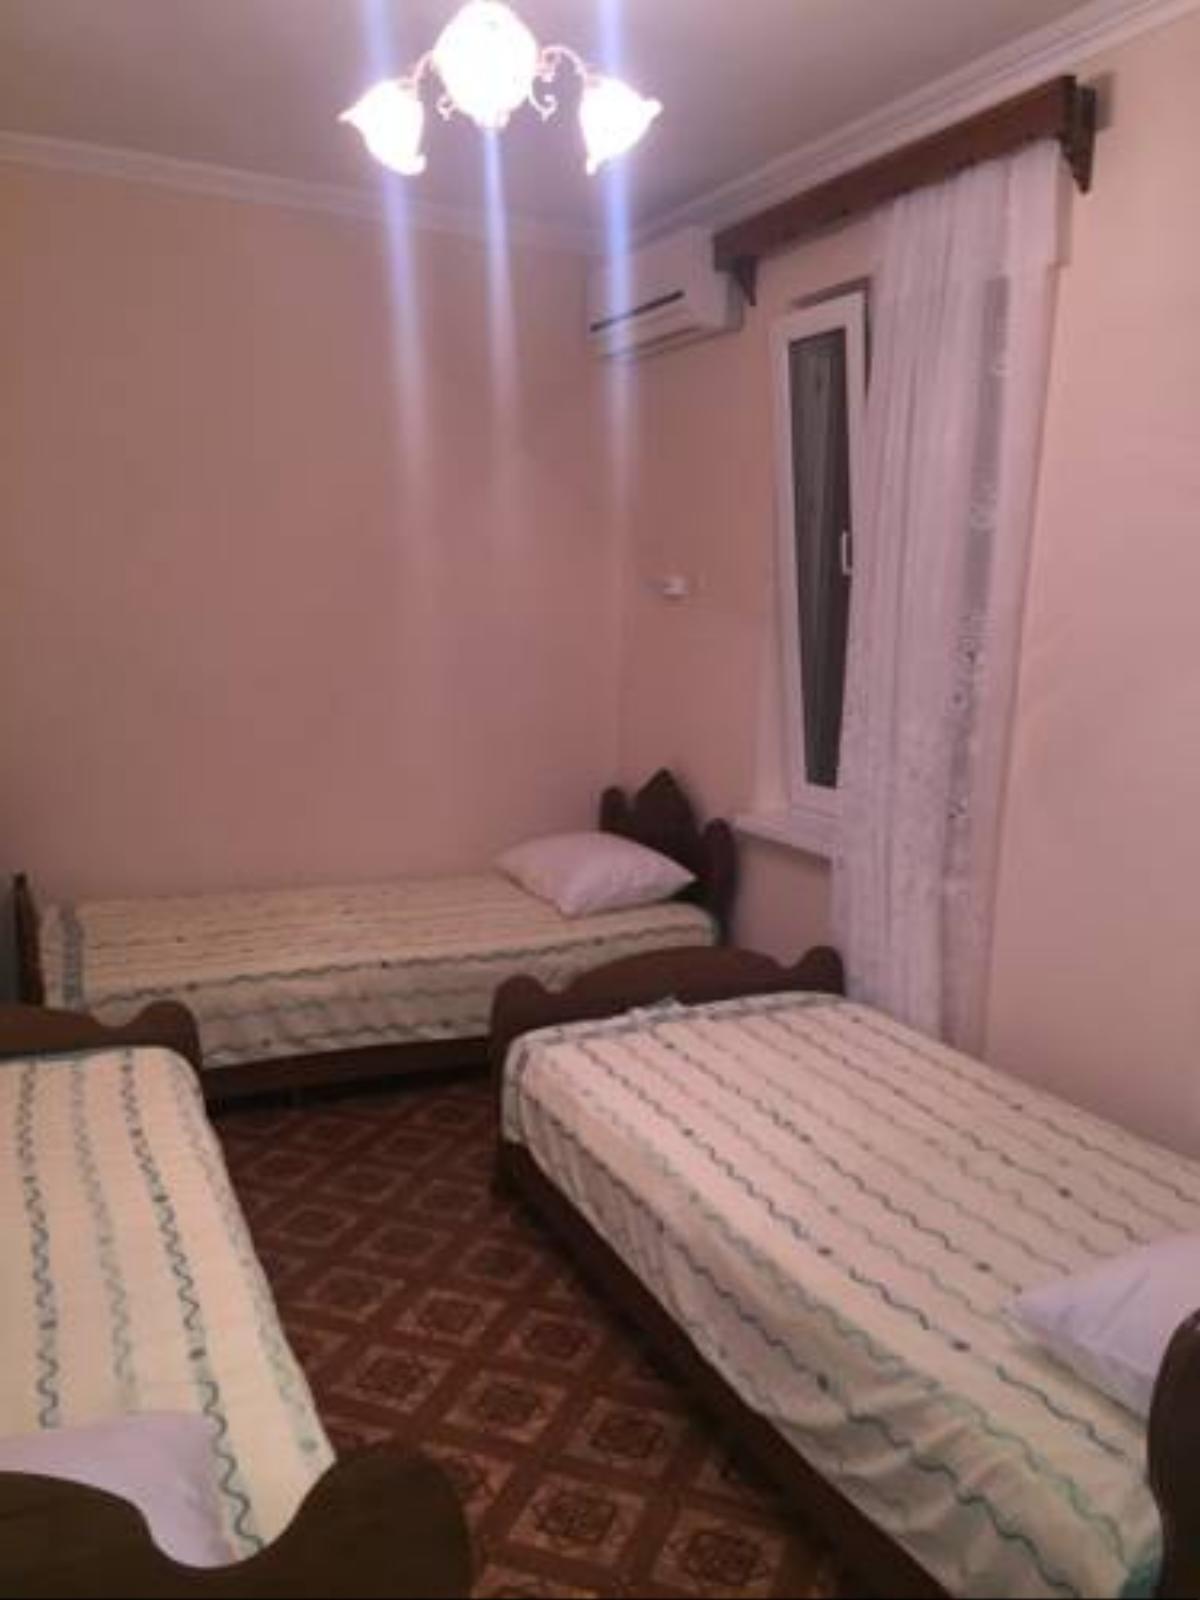 Guest House on Shakril Street Hotel Gudauta Abkhazia